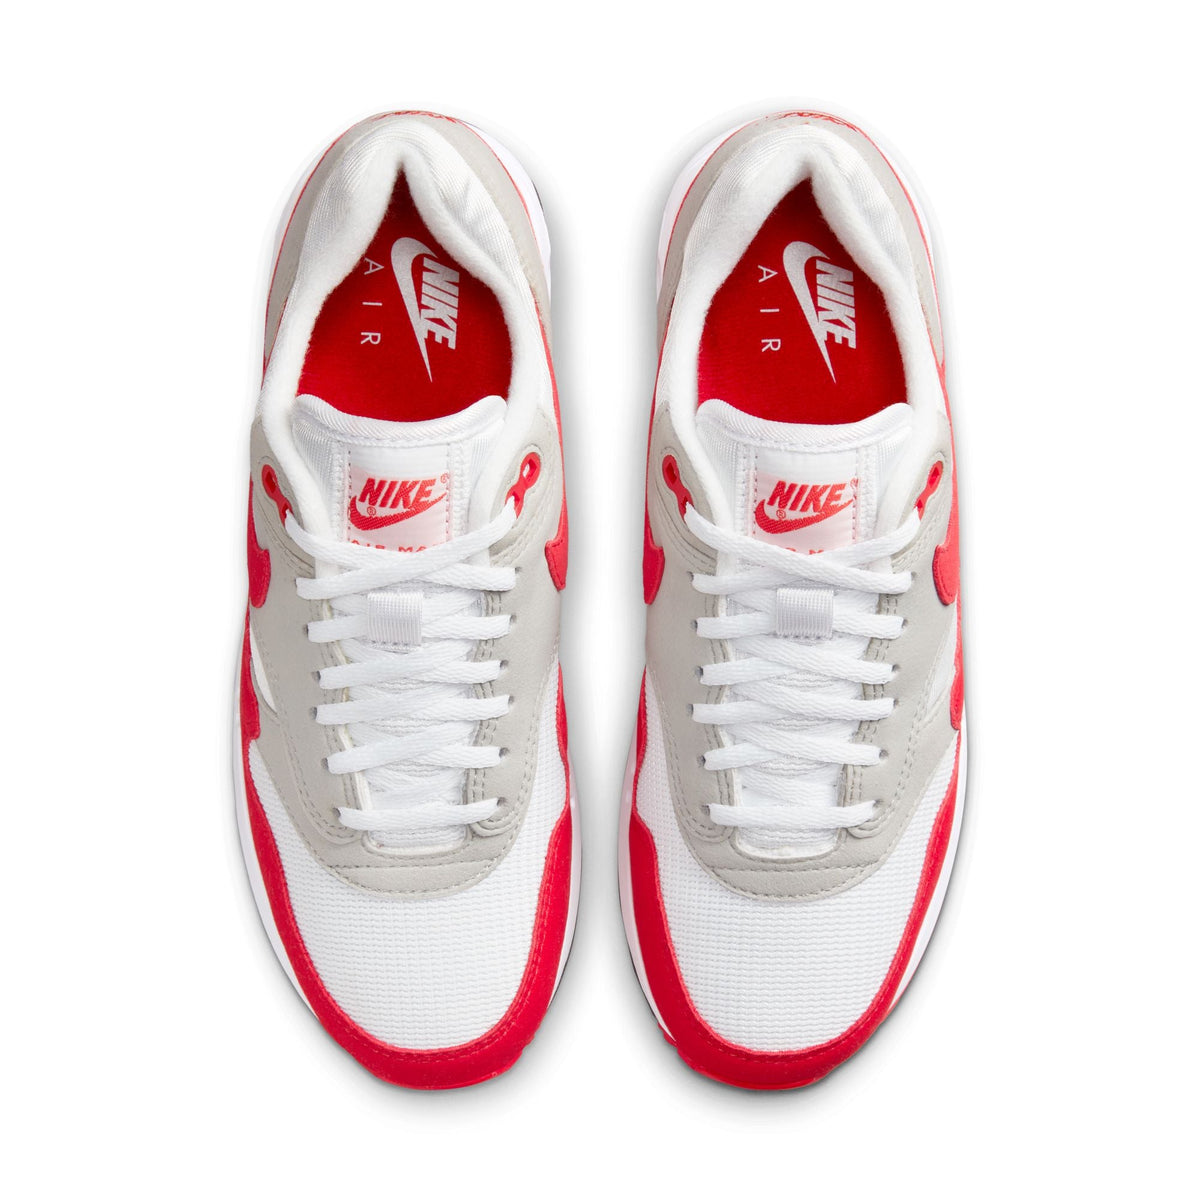 Nike Air Max 1 Premium Shoes.